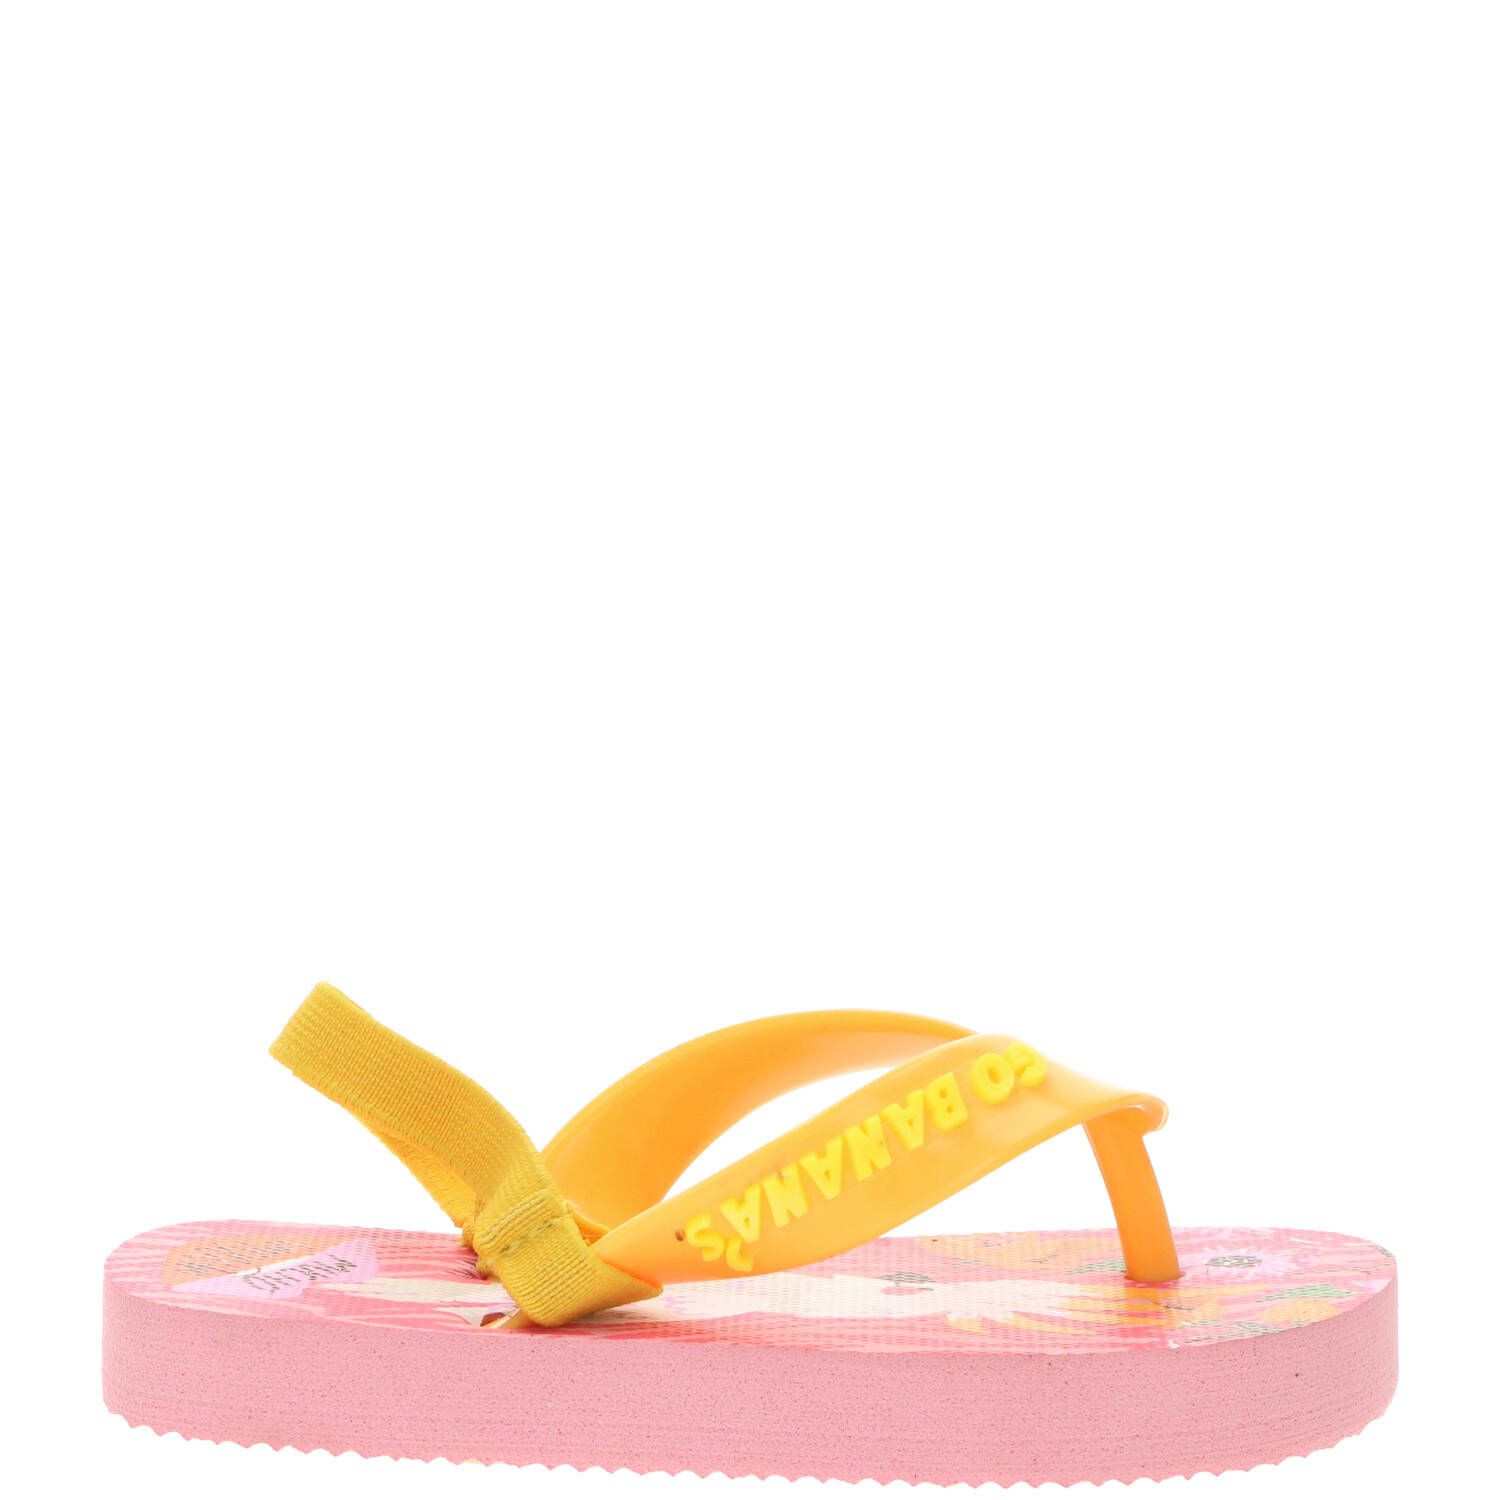 Go Banana's kakatoe slipper, Slippers, Meisje, Maat 27, roze/multi